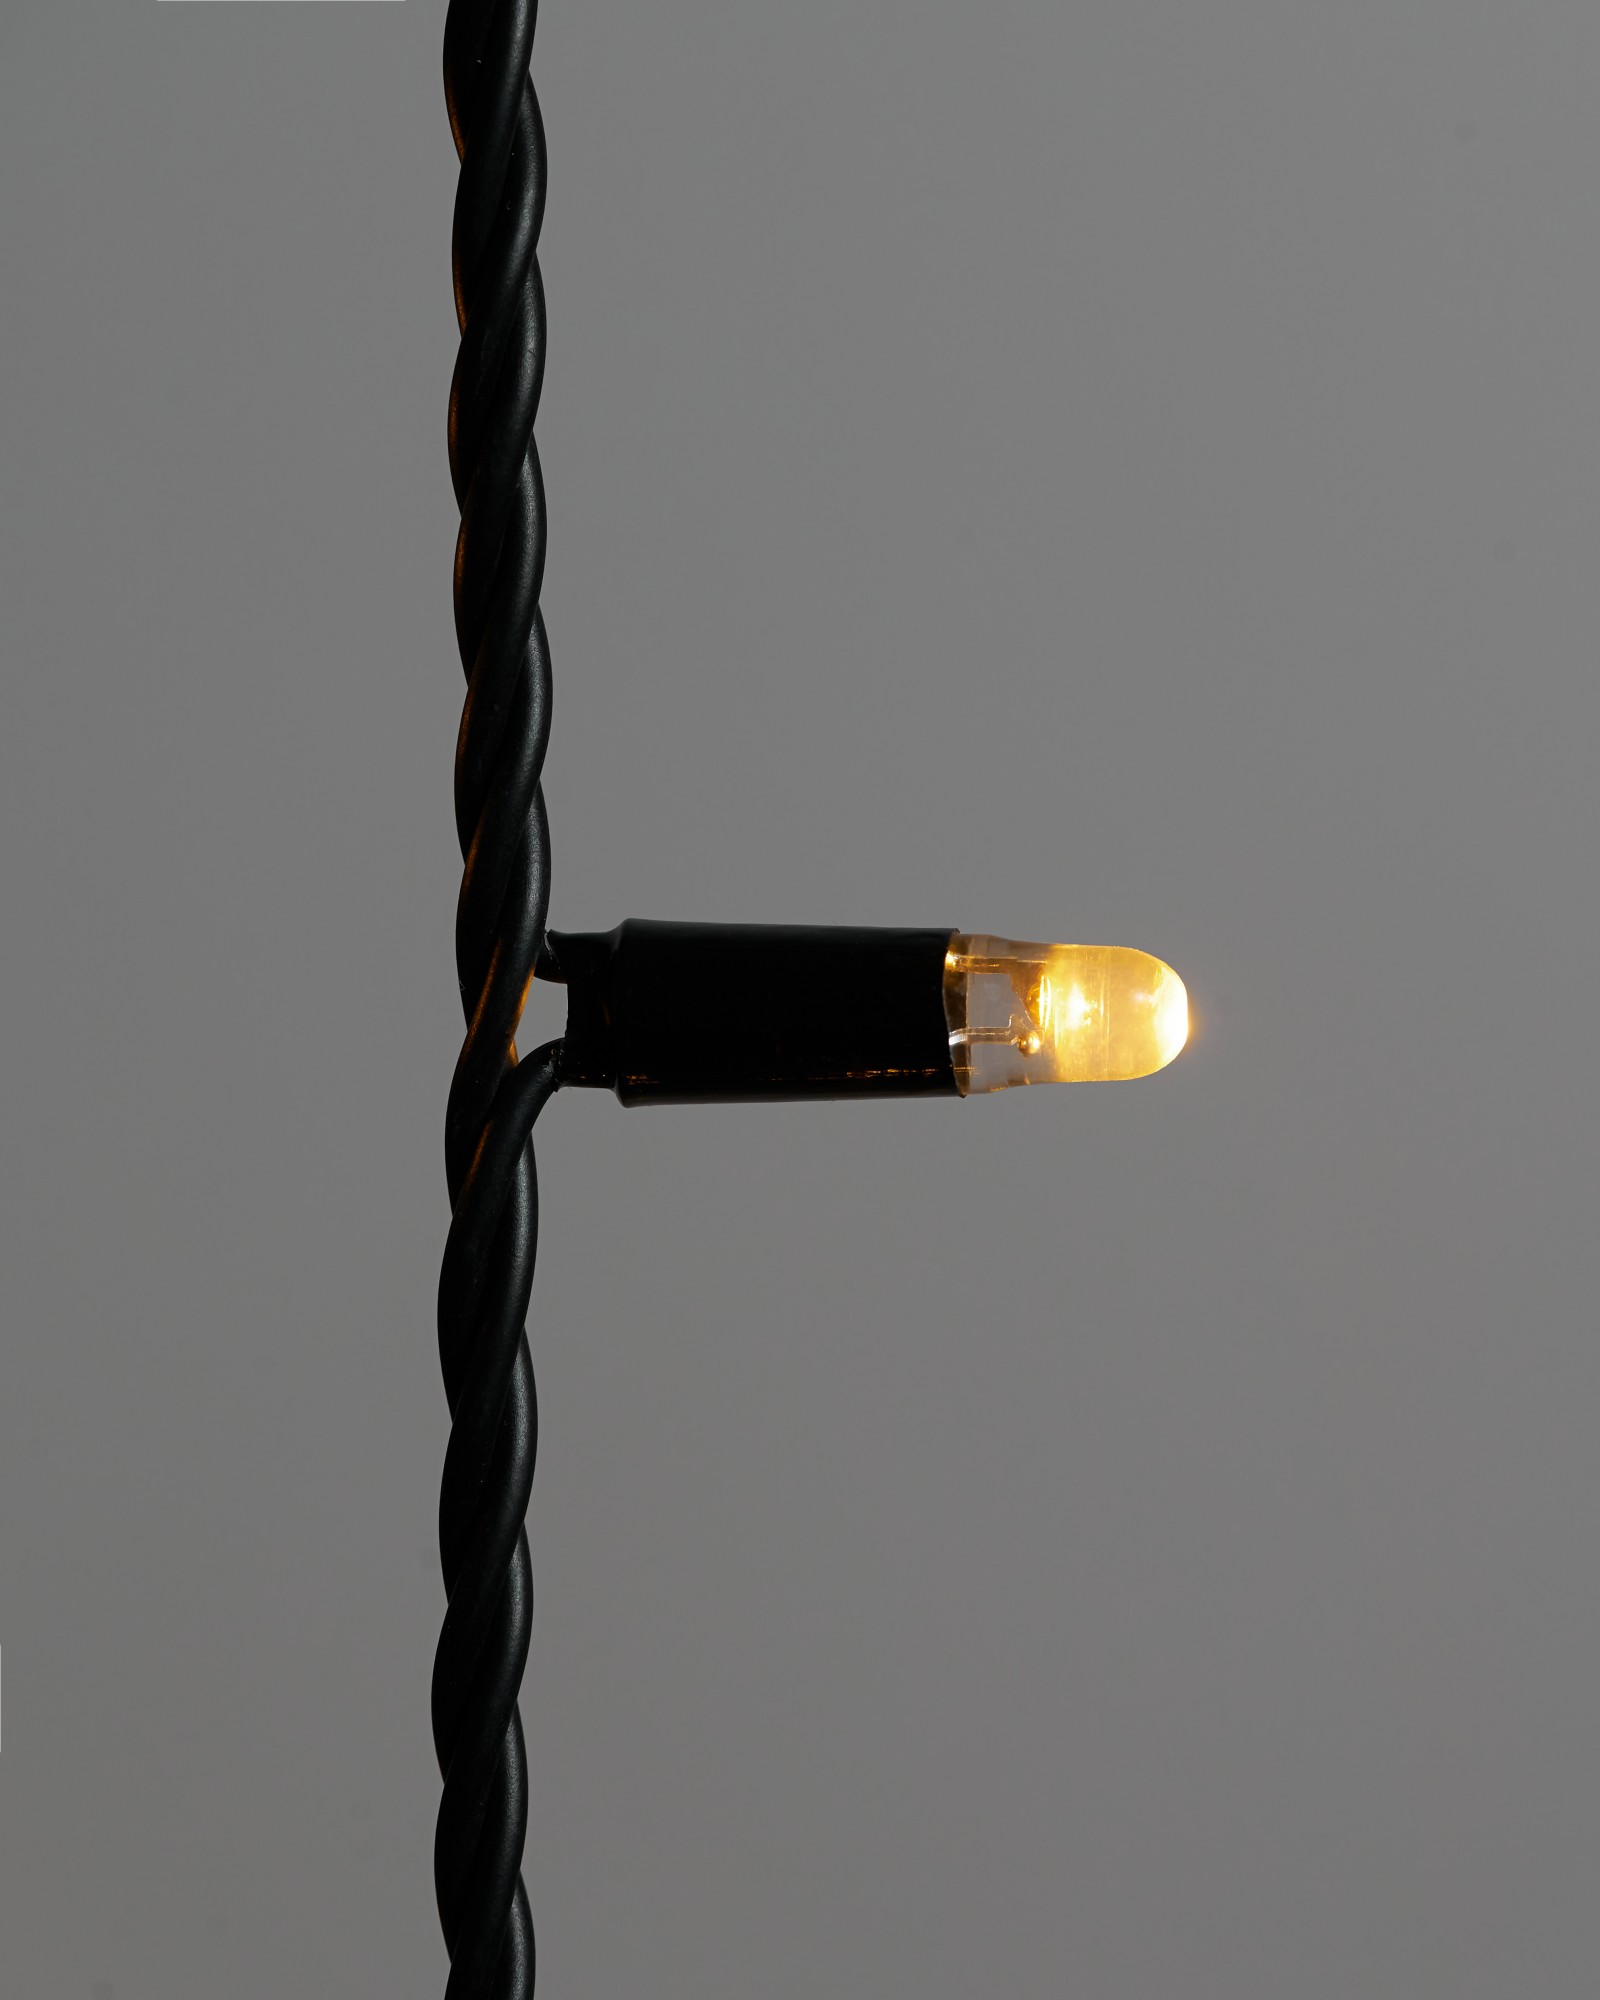 Гирлянда Бахрома INOXHUB 3х0.6м, мерцающая с конденсатором, 108 LED, 220В, IP65, чёрная резина 3.3мм, ТЁПЛАЯ БЕЛАЯ фото Иноксхаб